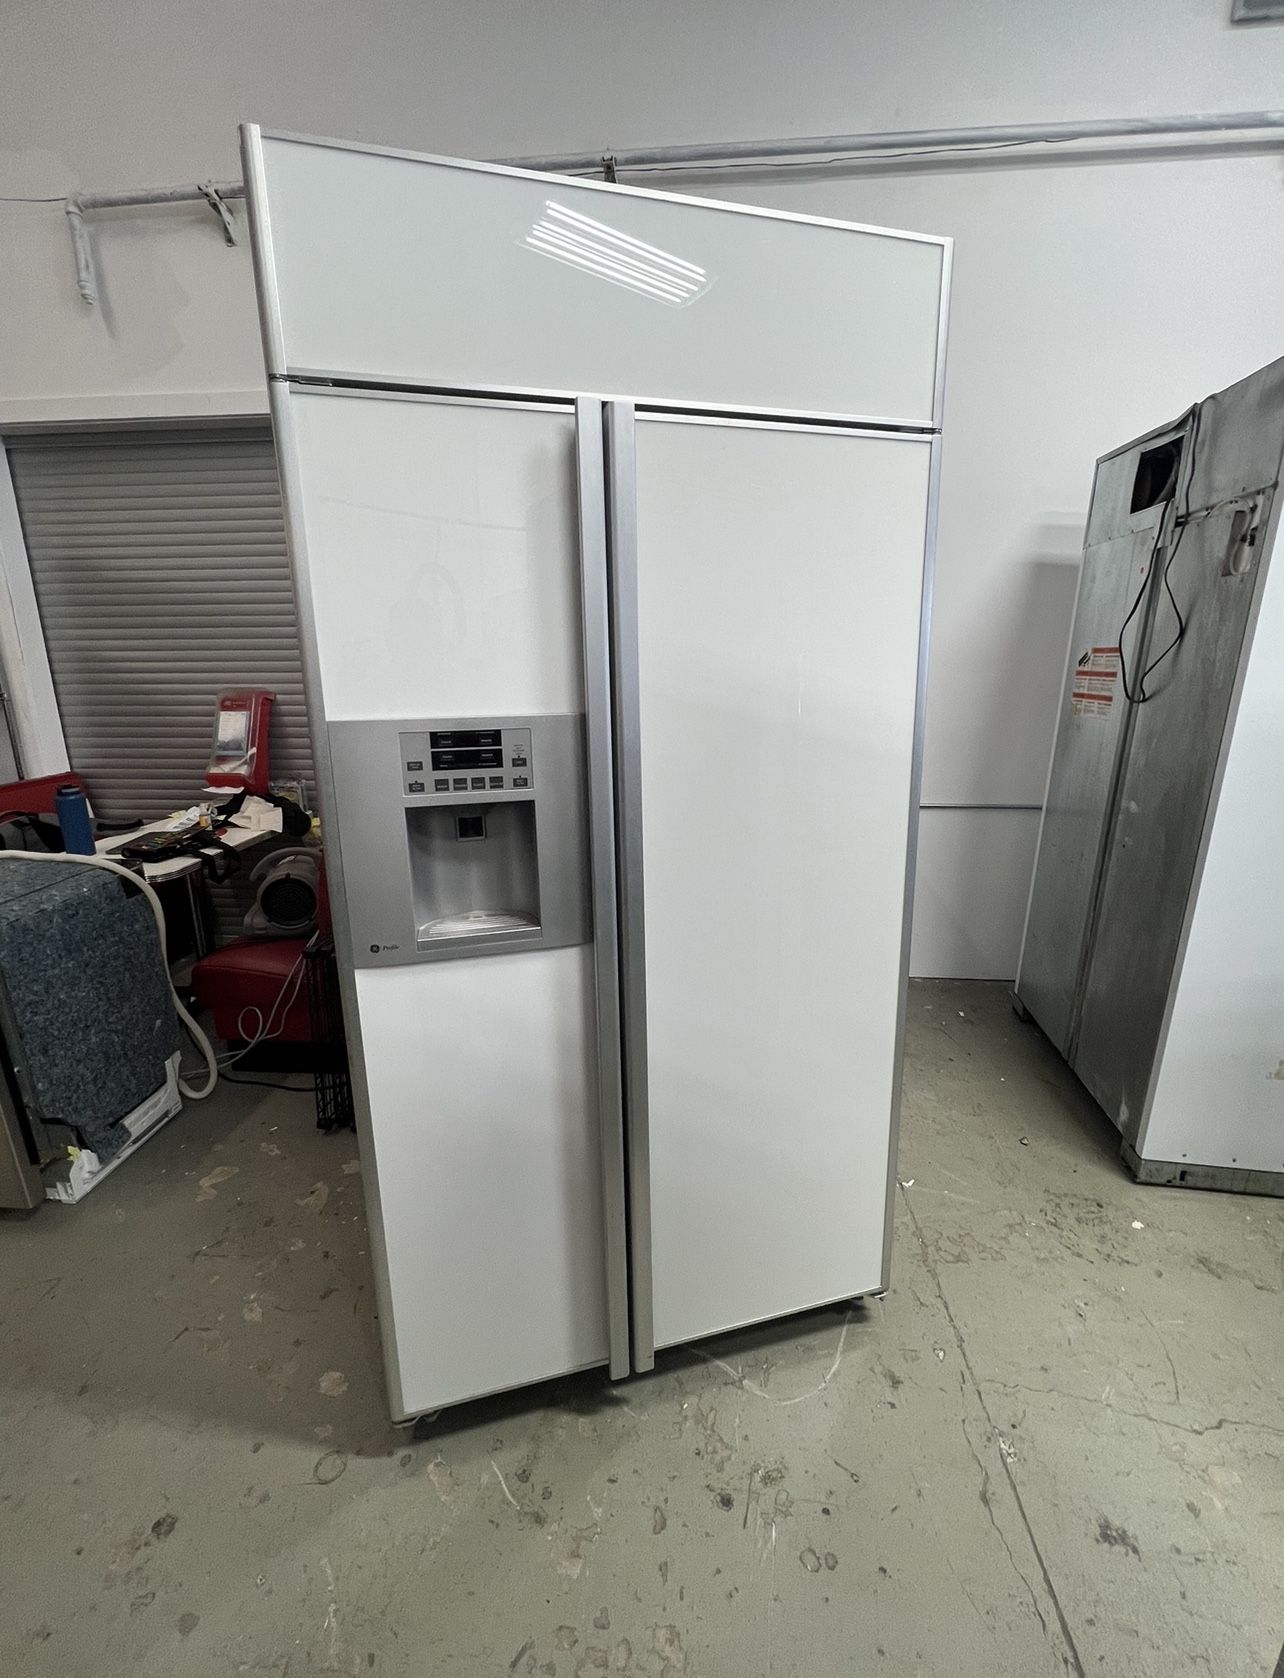 GE Monogram Built In Refrigerator Freezer